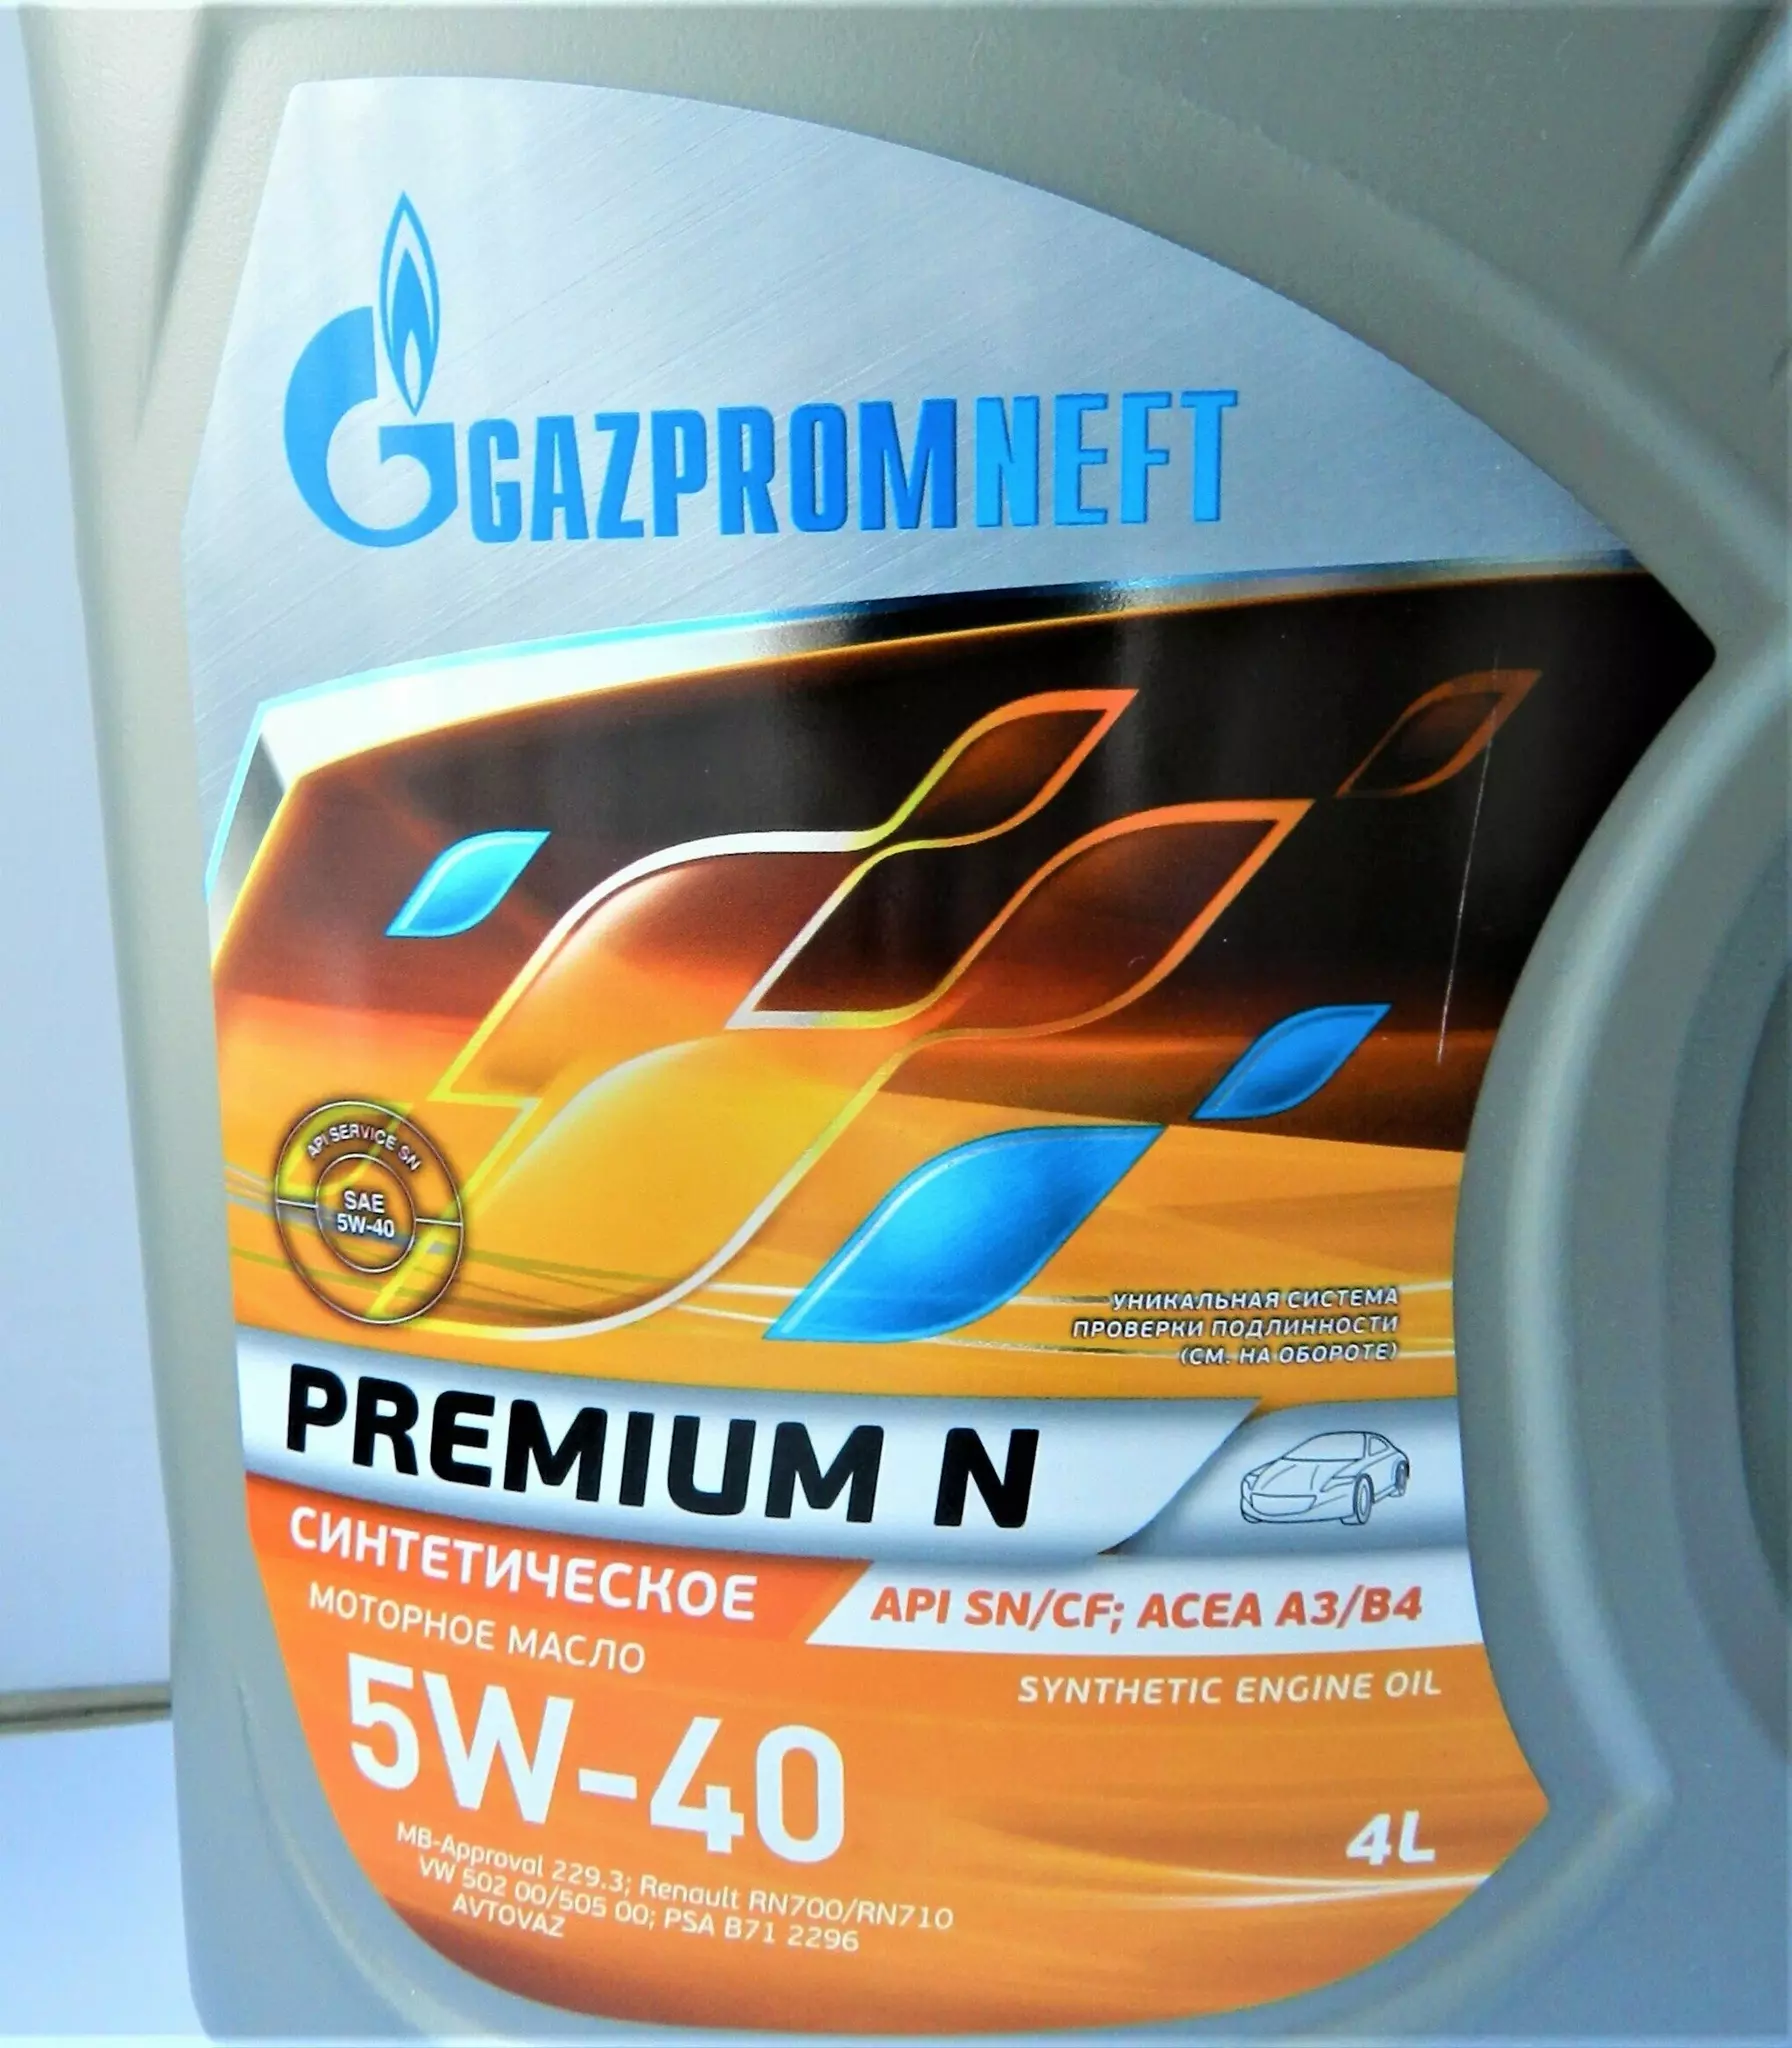 Масло газпромнефть 5w40 premium. Gazpromneft Premium n 5w-40. Premium n5w40 4л. Масло Premium n 5w-40 4л Gazpromneft. Gazpromneft масло Premium n 5w-40 4л ЕОМ номер.